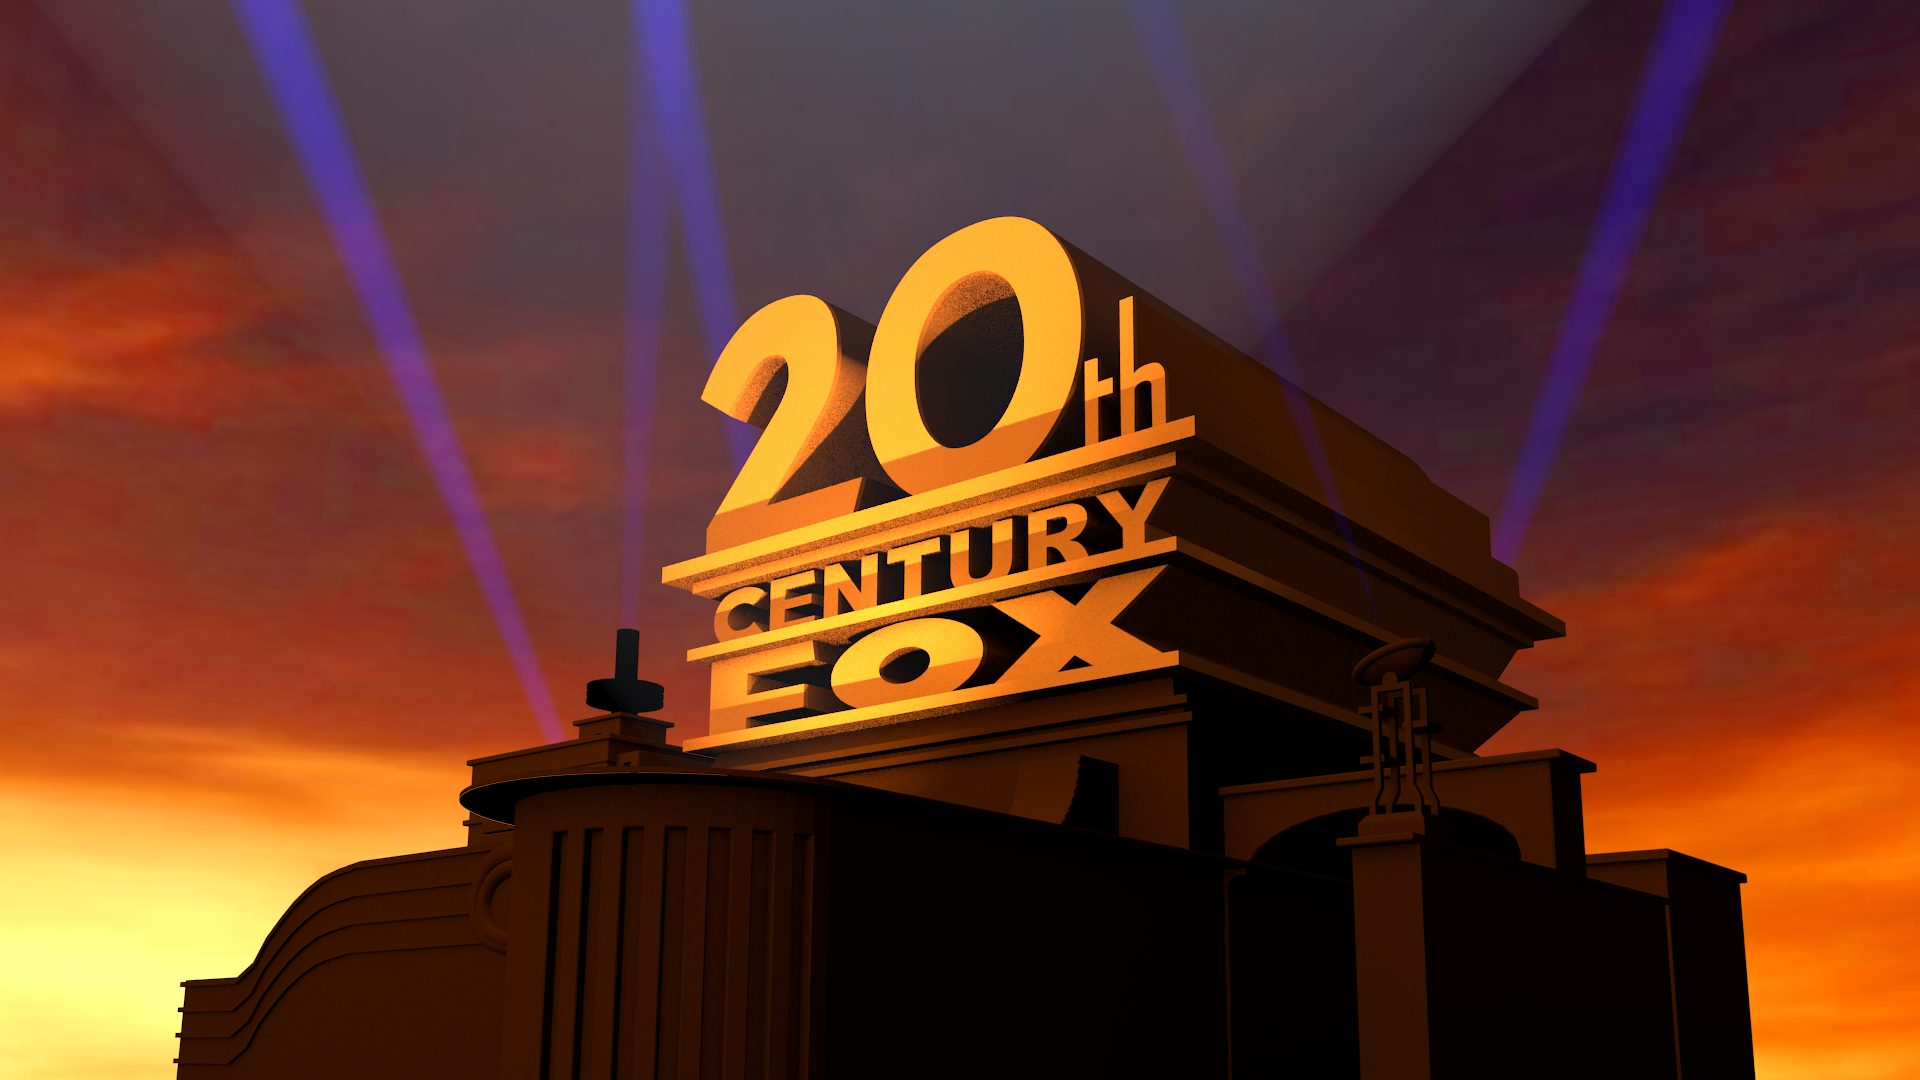 Заставка fox. 20 Век Fox. Сенчури Фокс. 20tn Century Fox. Кинокомпания 20 век Фокс.